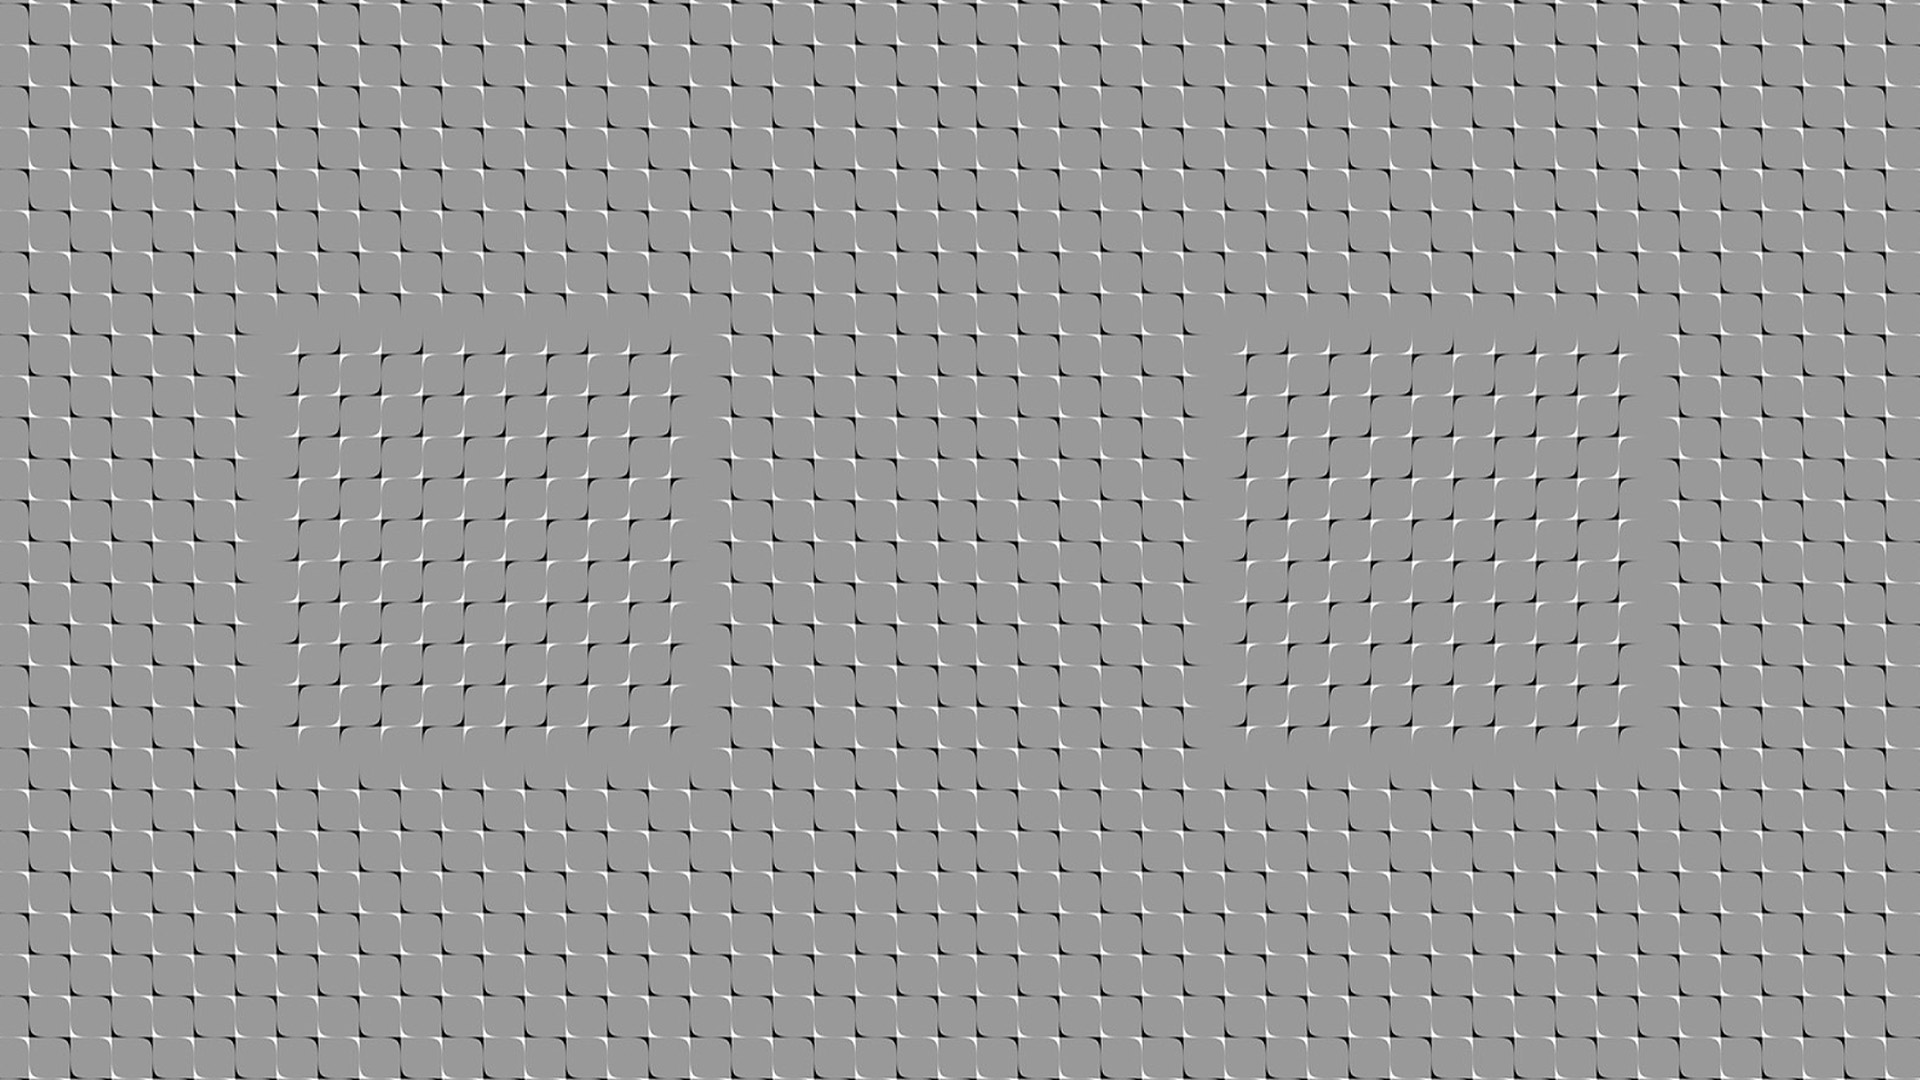 Optical Illusion wallpaper